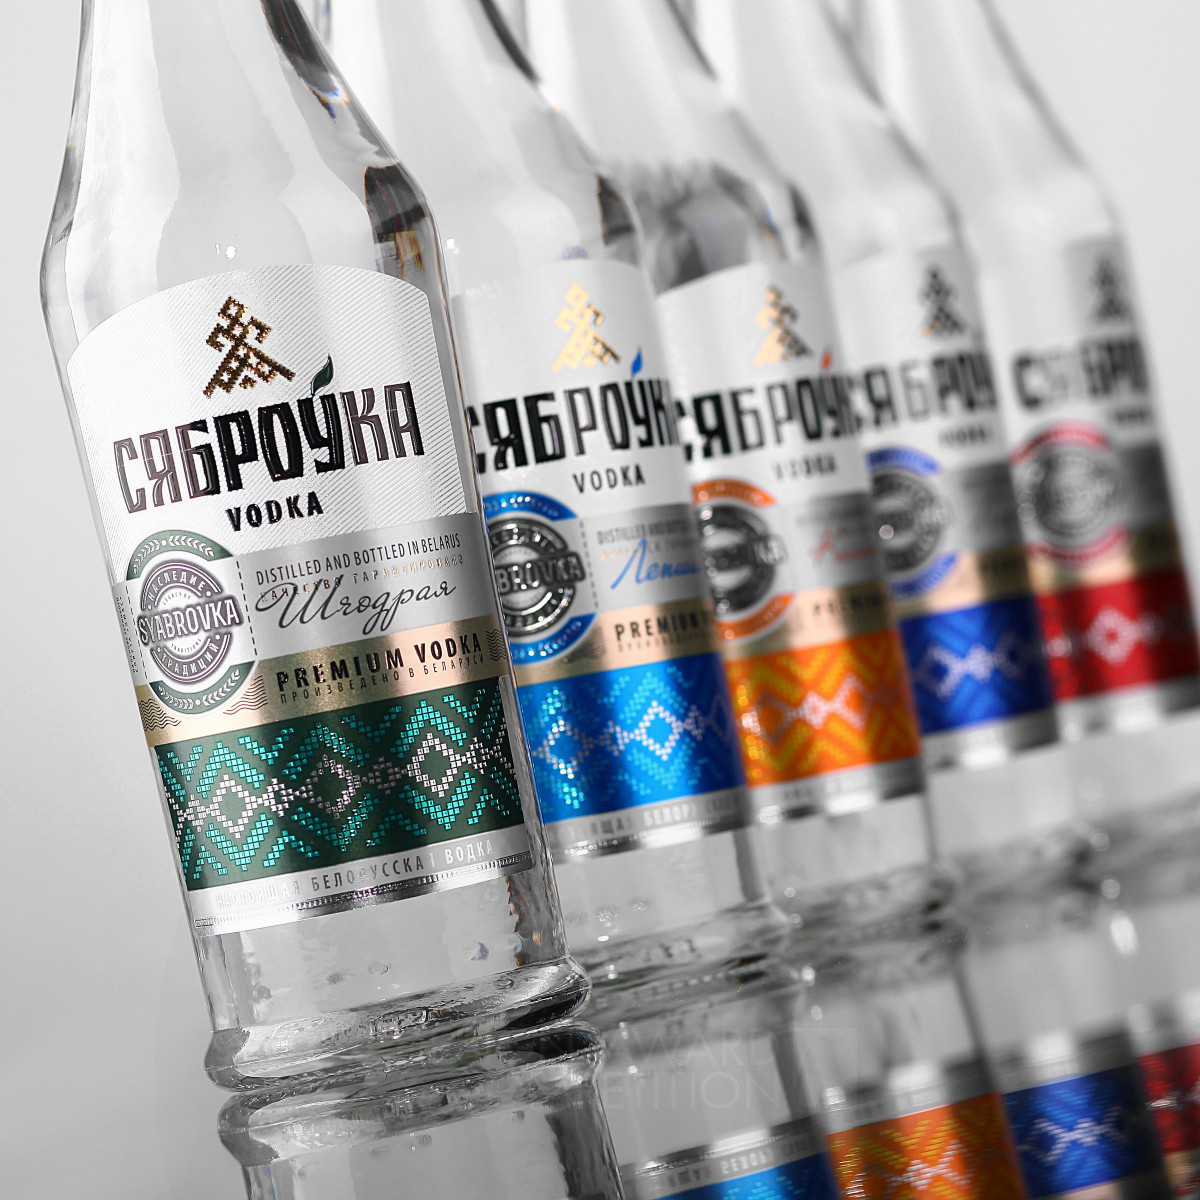 Syabrovka <b>Belarusian vodka